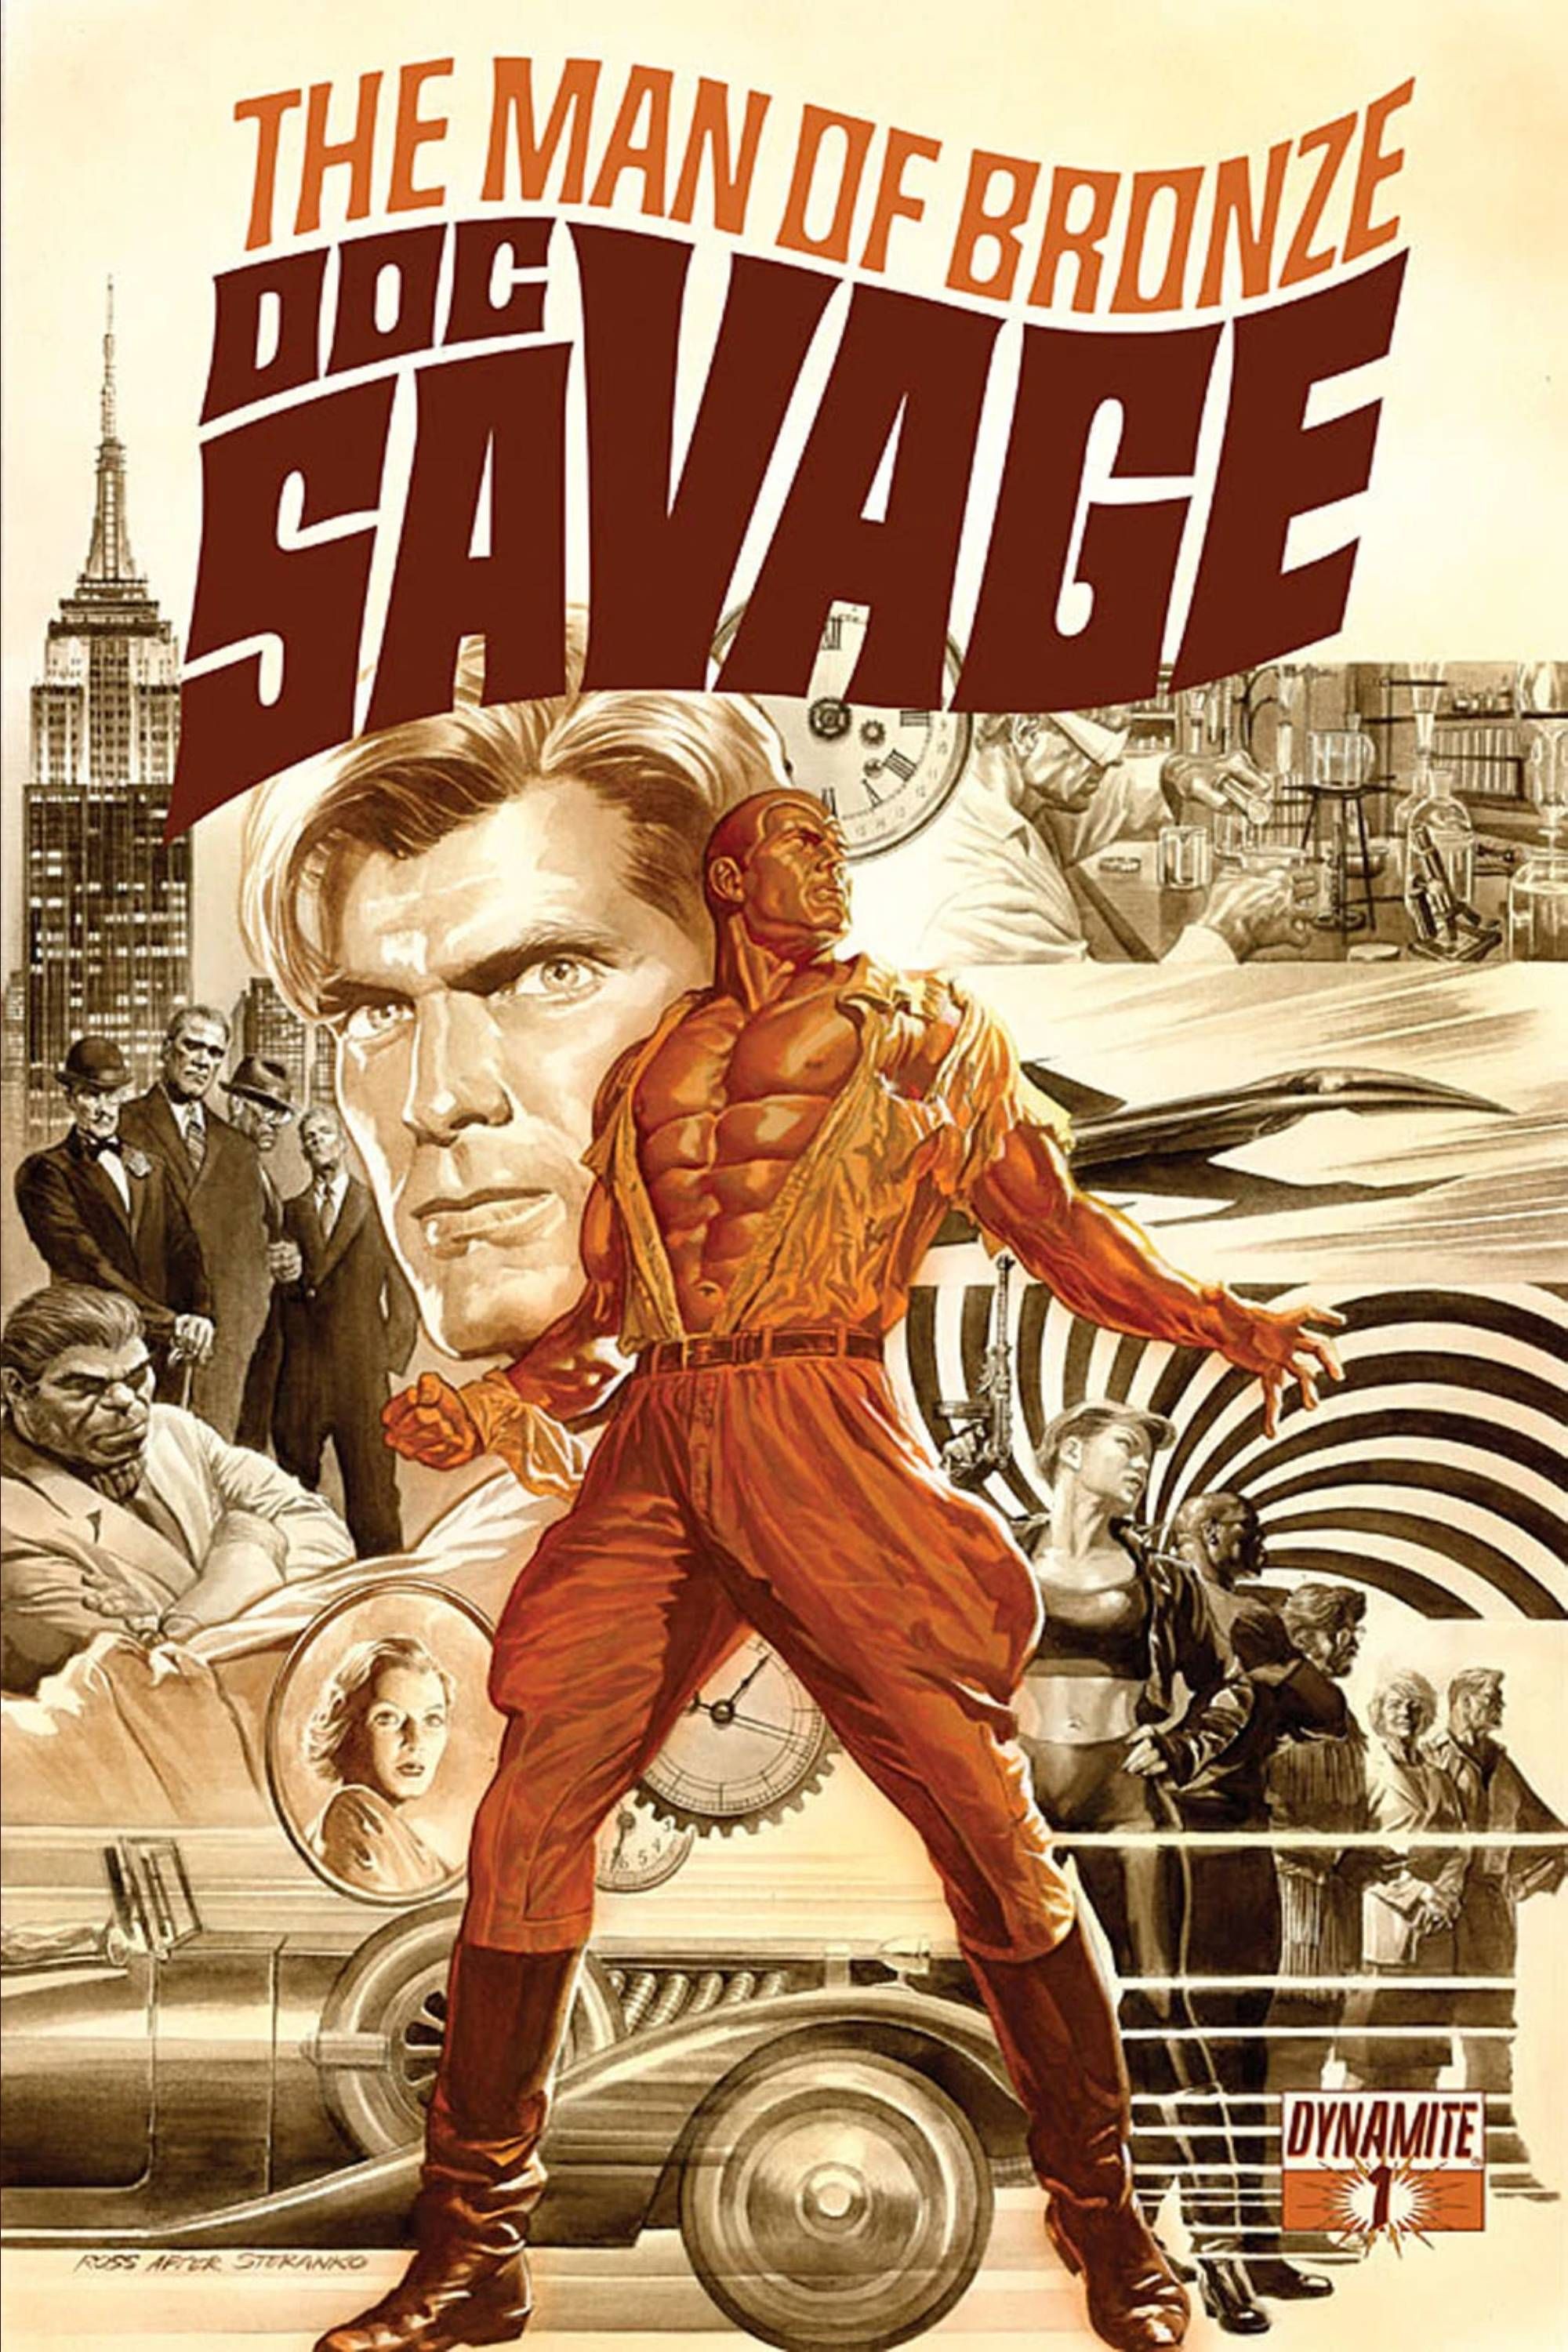 doc savage poster